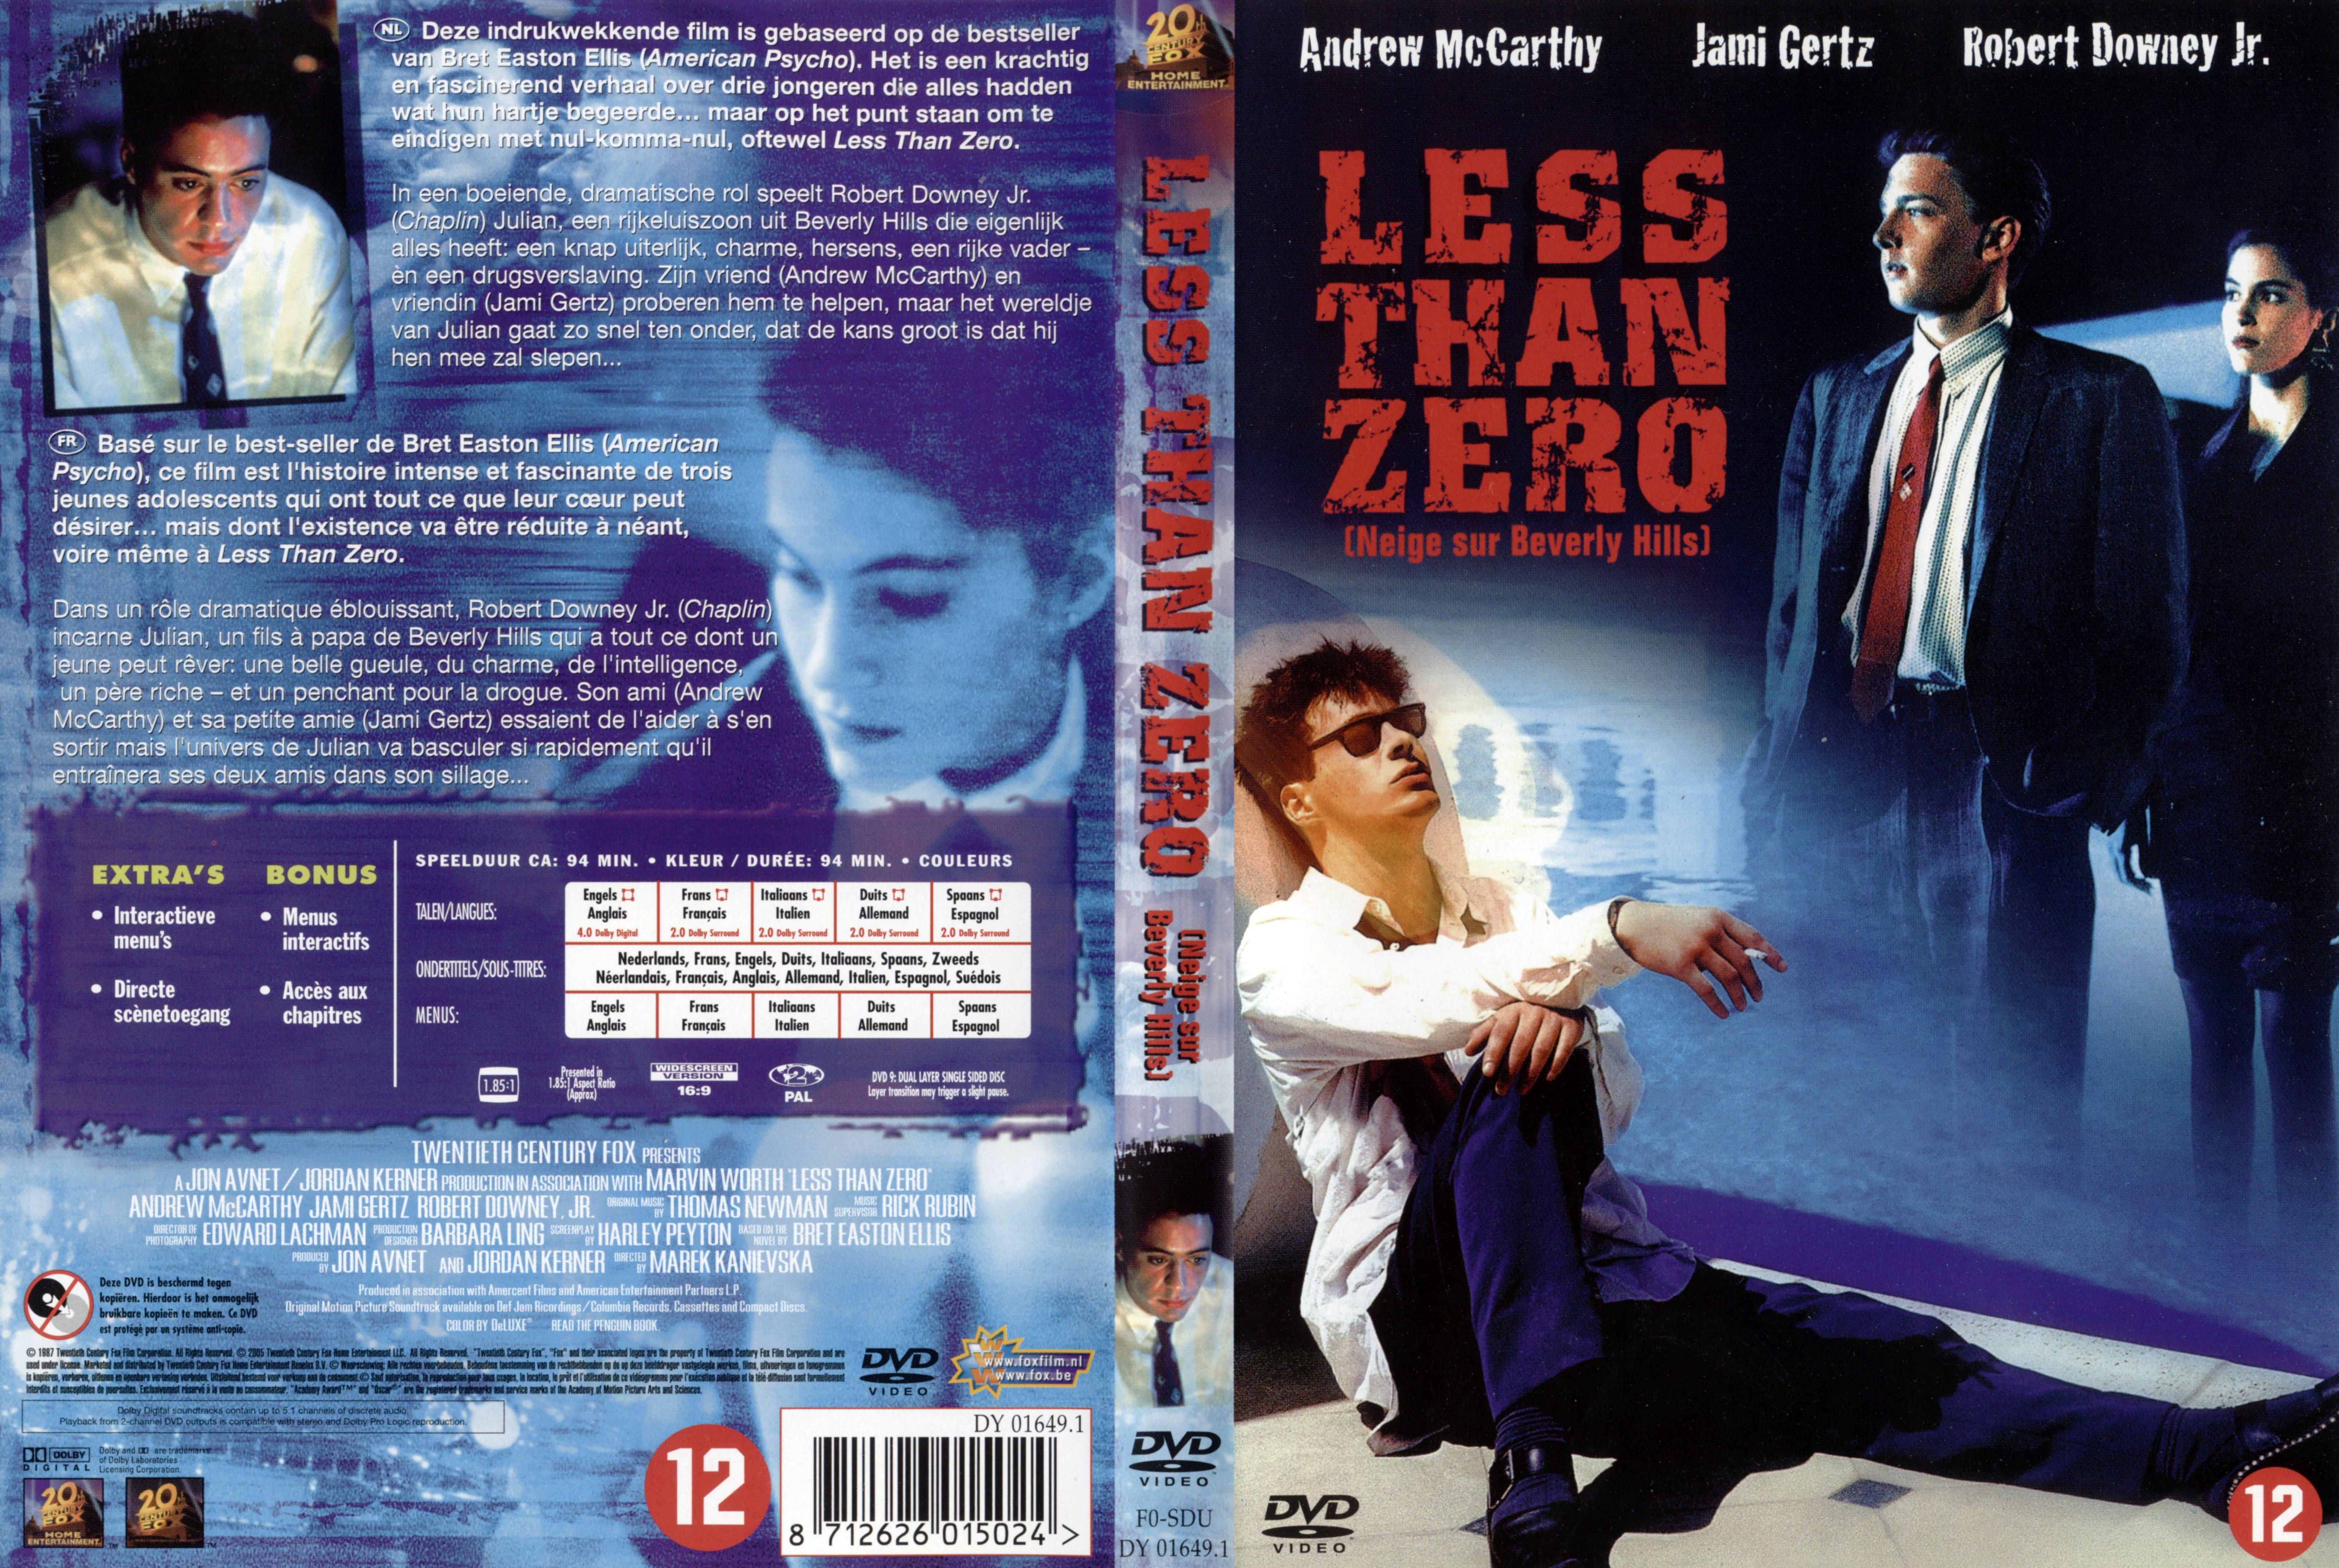 Jaquette DVD Less than zero - Neige sur Beverly Hills